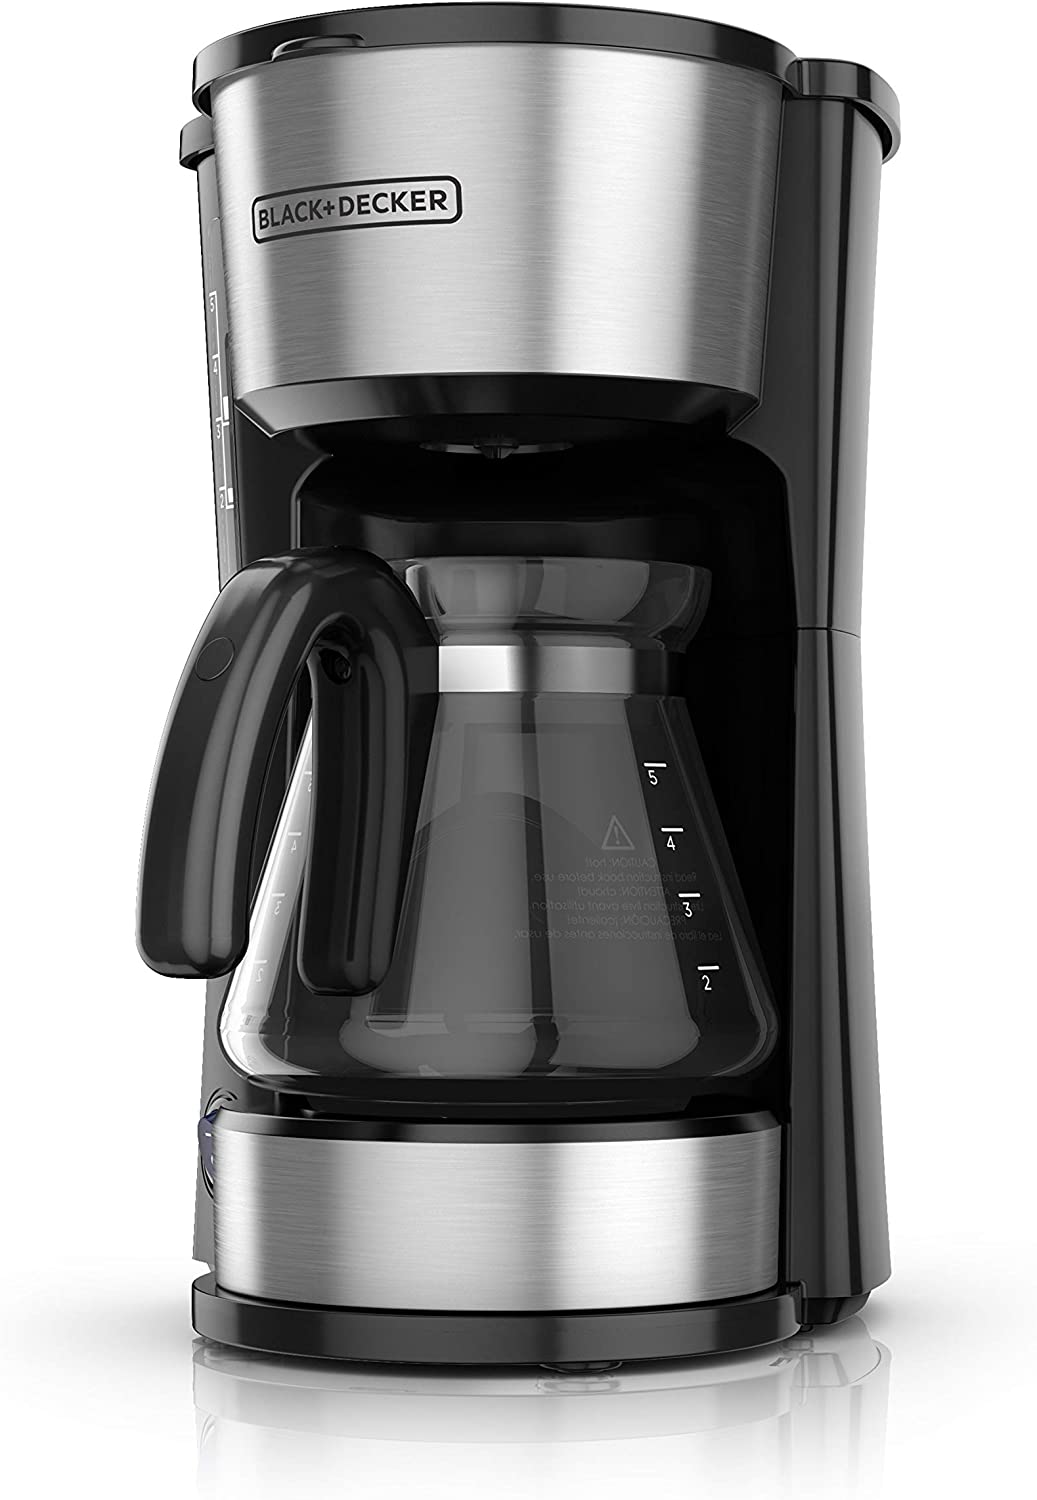 Braun Multi Serve Drip Coffee Maker KF9050 220v